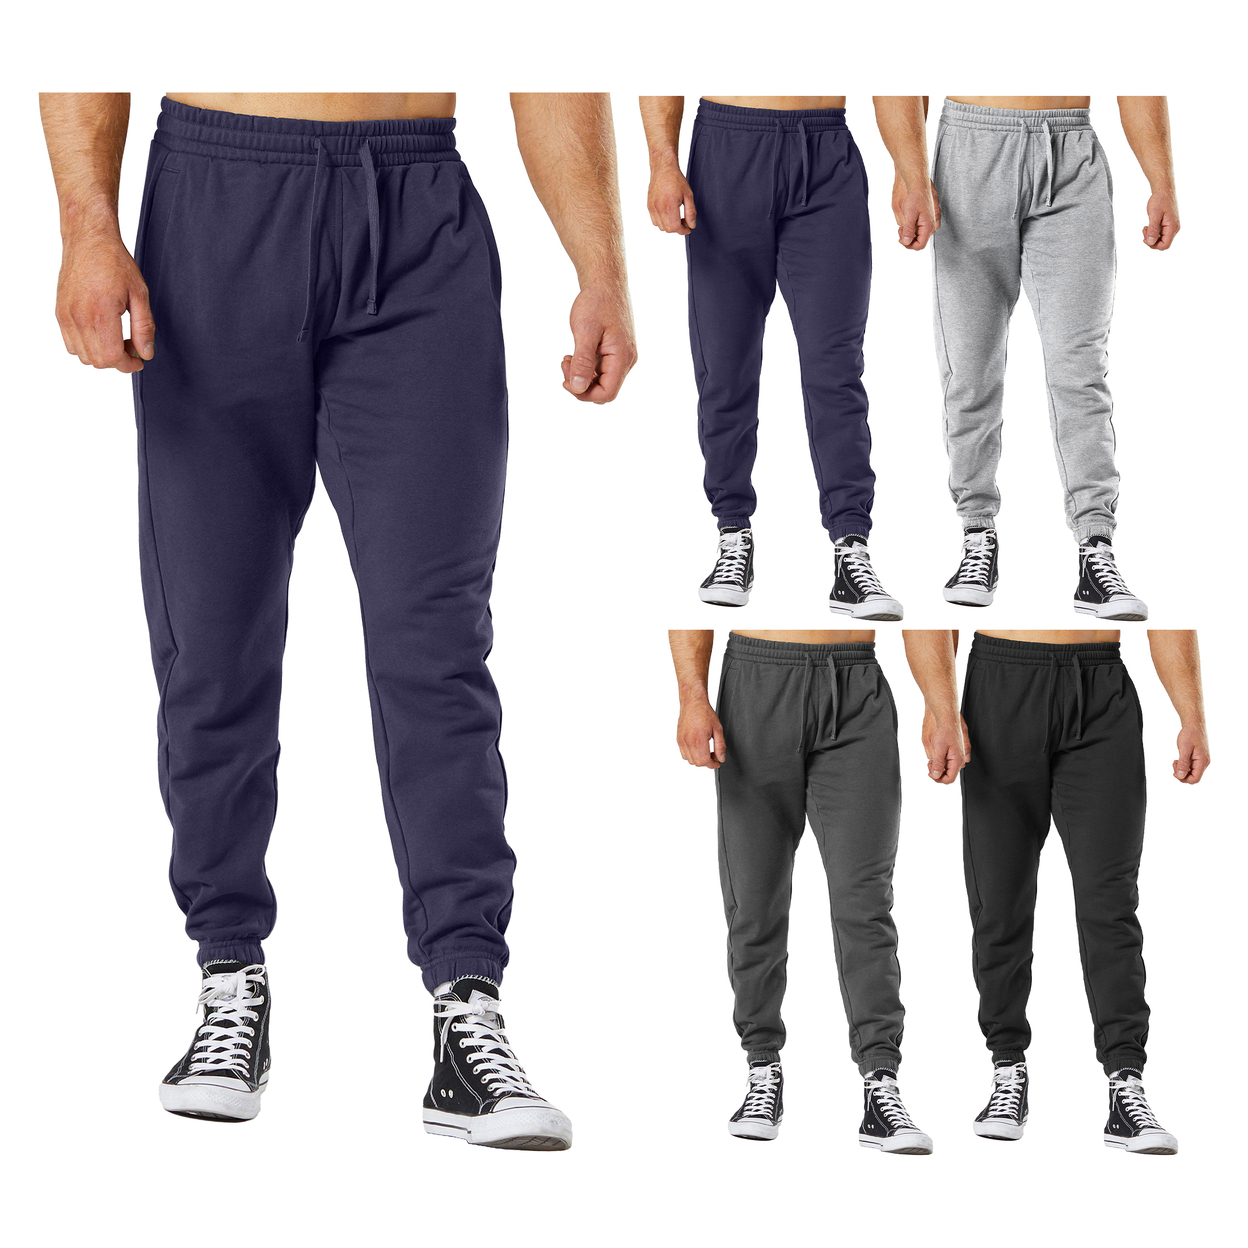 Men's Ultra-Soft Cozy Winter Warm Casual Fleece Lined Sweatpants Jogger - Black, Medium